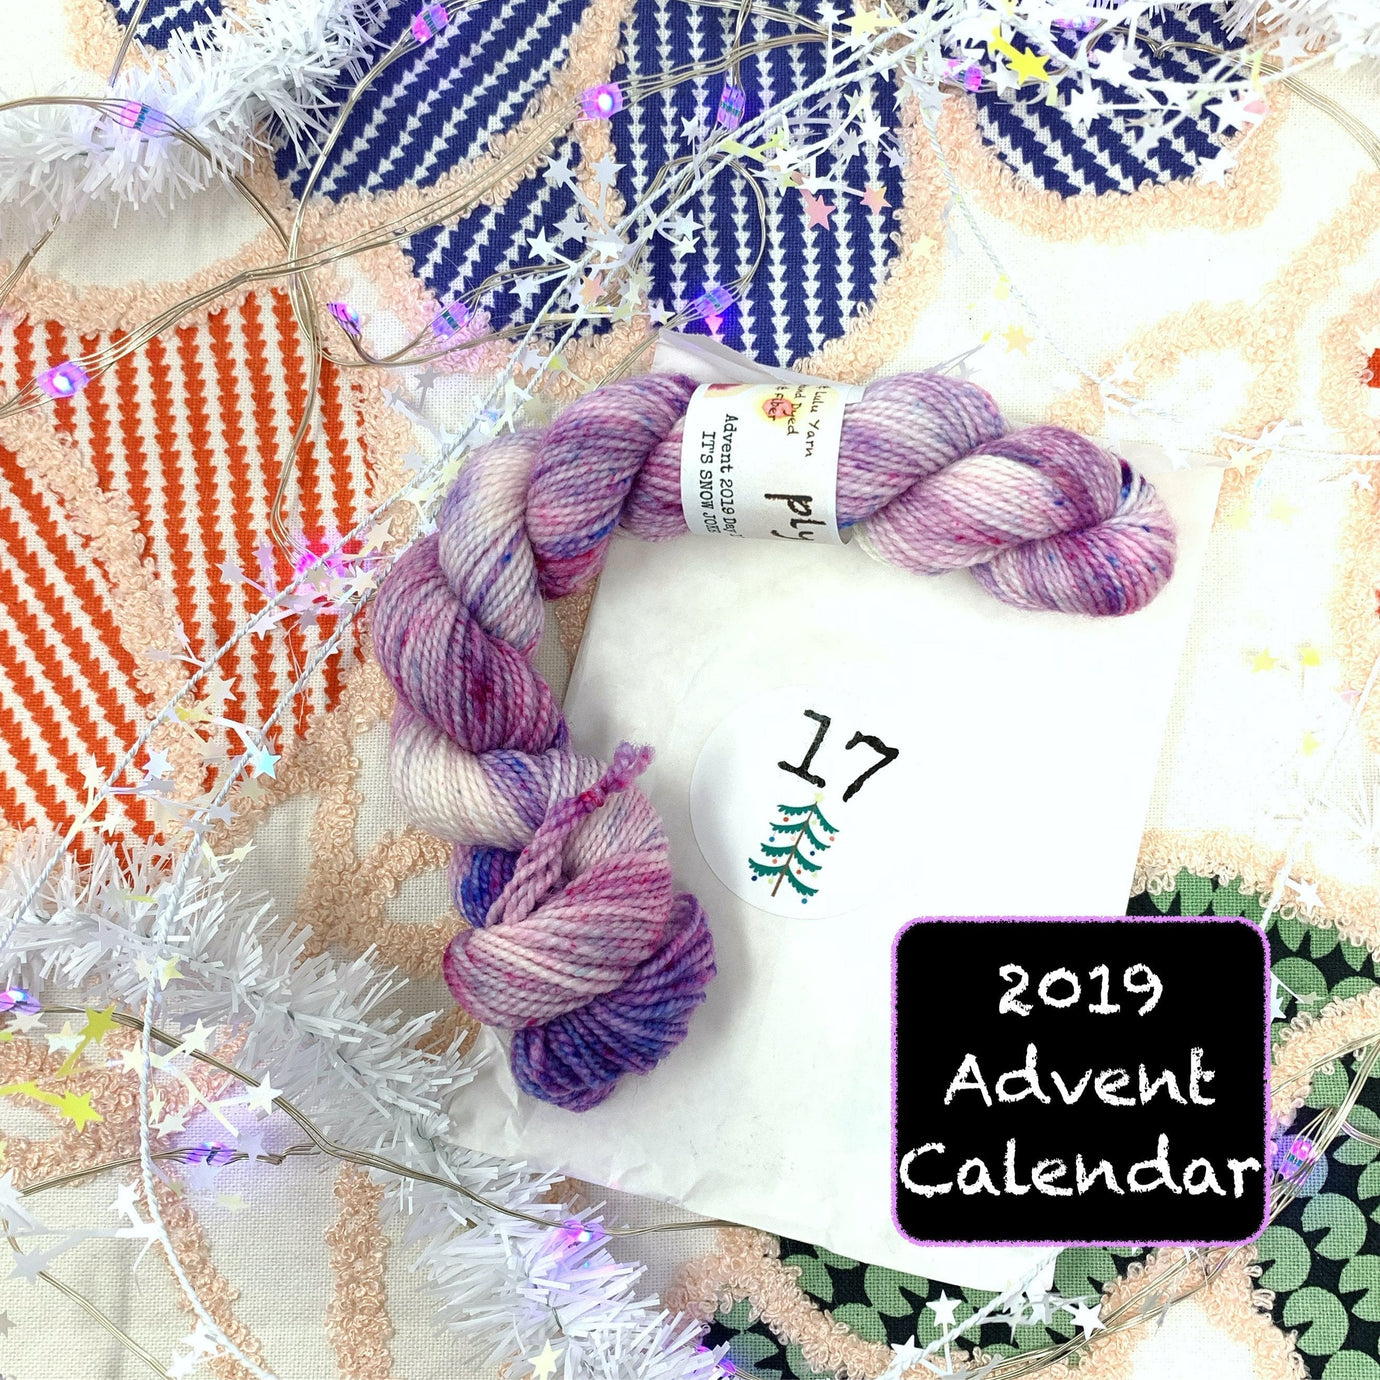 2024 Festive Yarn Tasting Mini Skein Advent Calendar Pre-Order